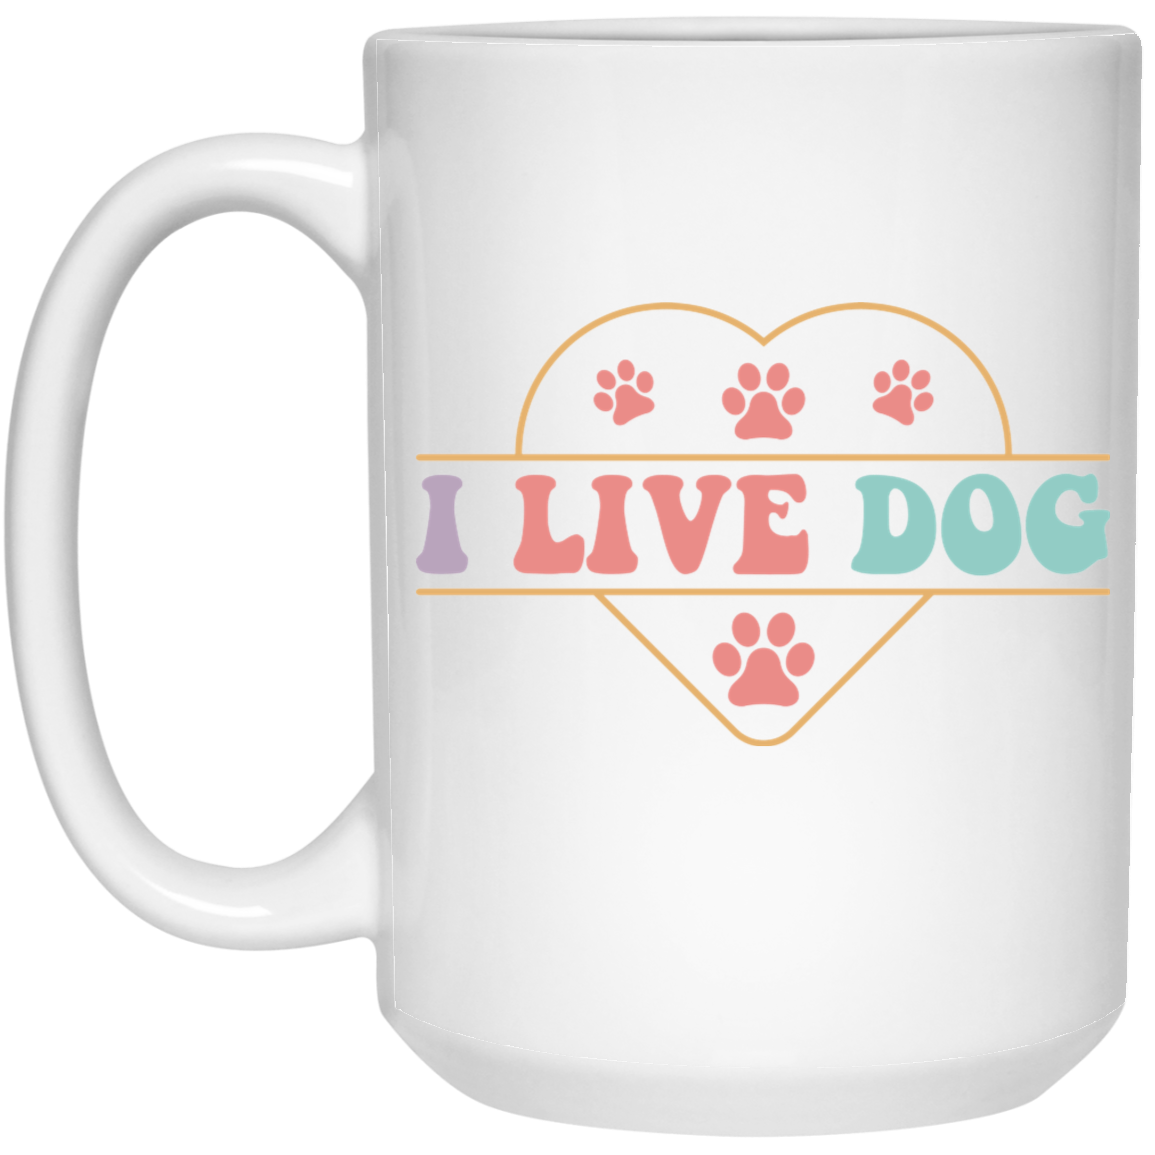 I Live Dog Paw Print 15 oz. White Mug